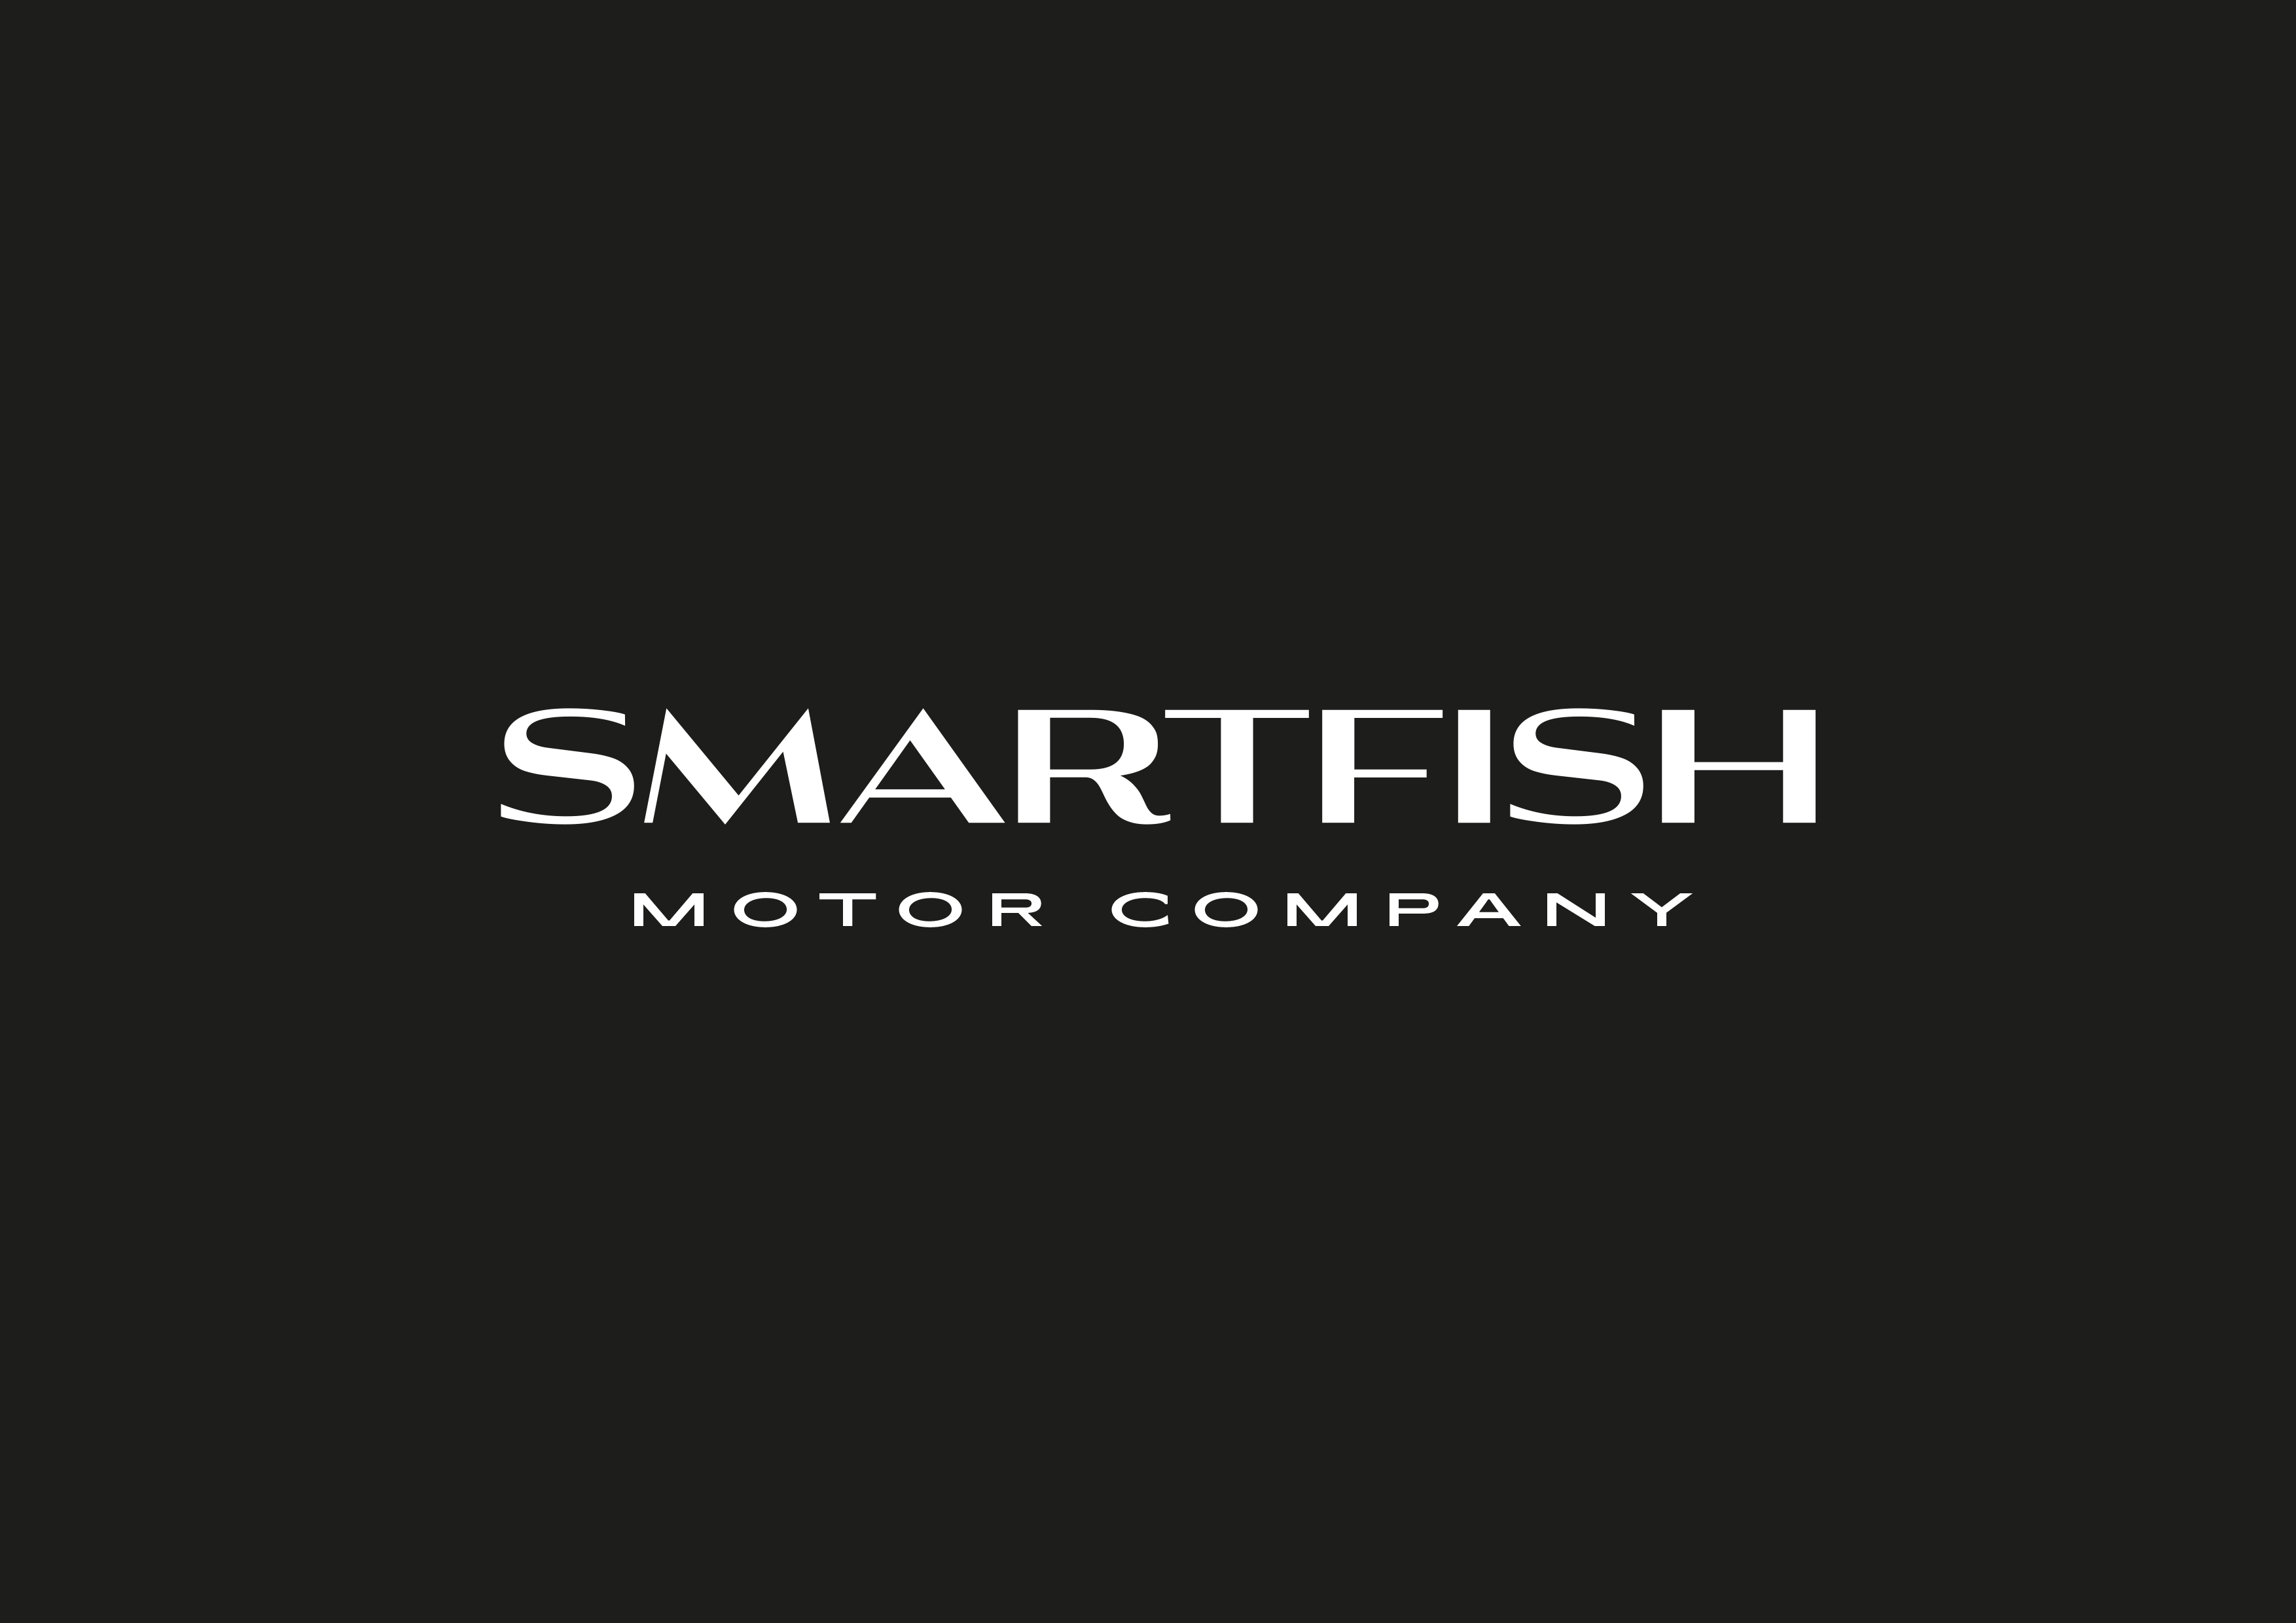 Smartfish Motor Company